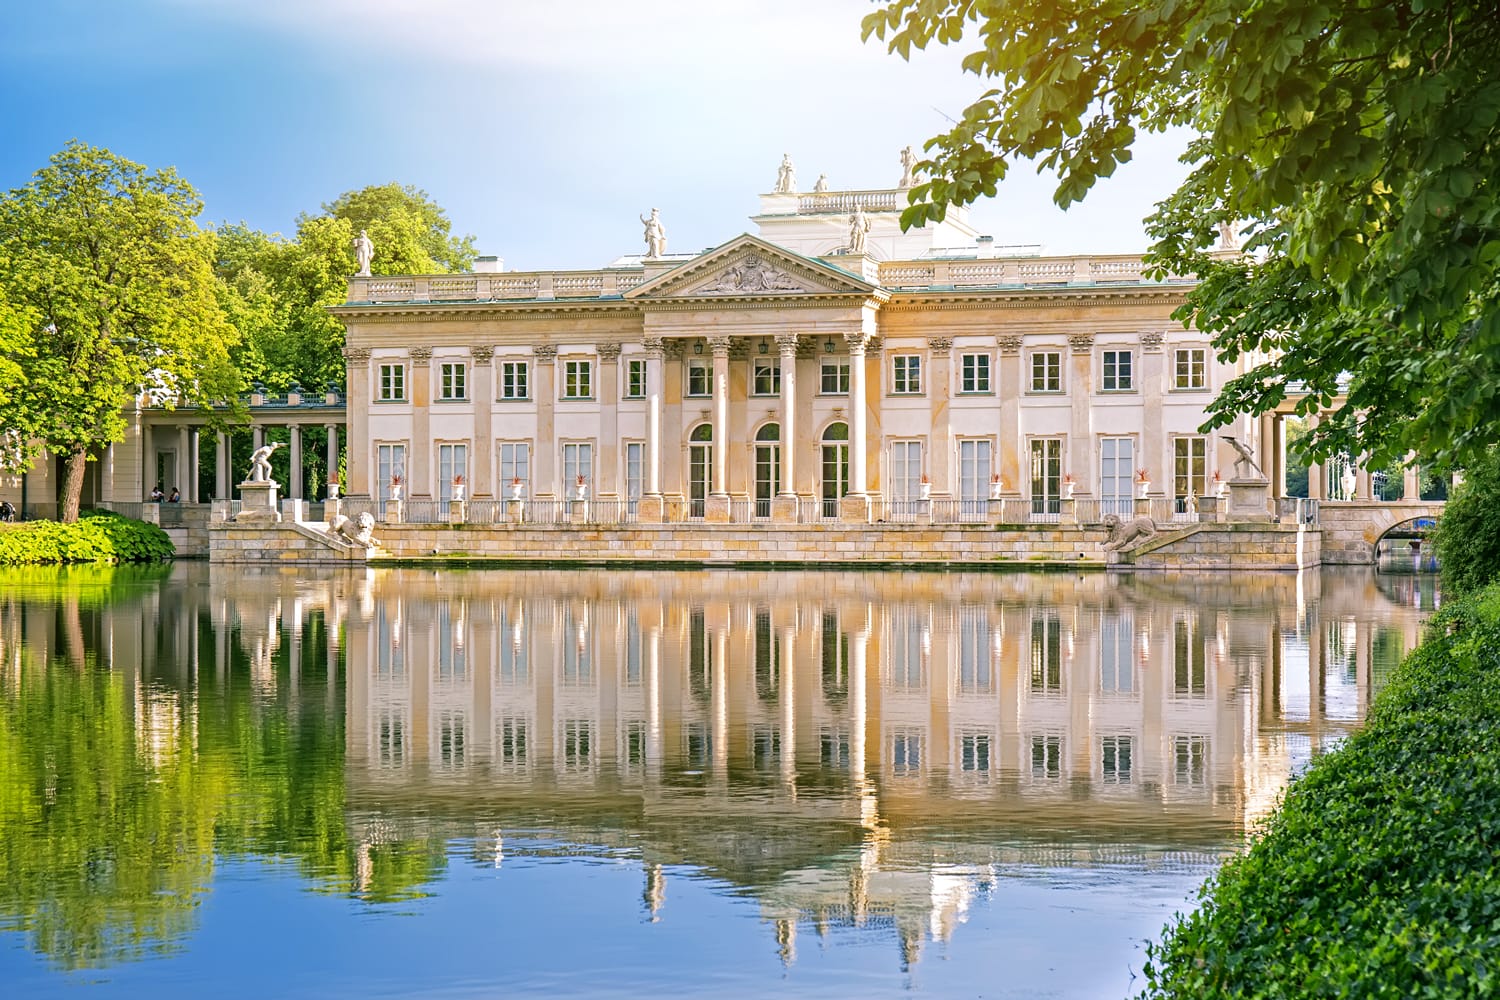 Lazienki royal palace in Warsaw, Poland